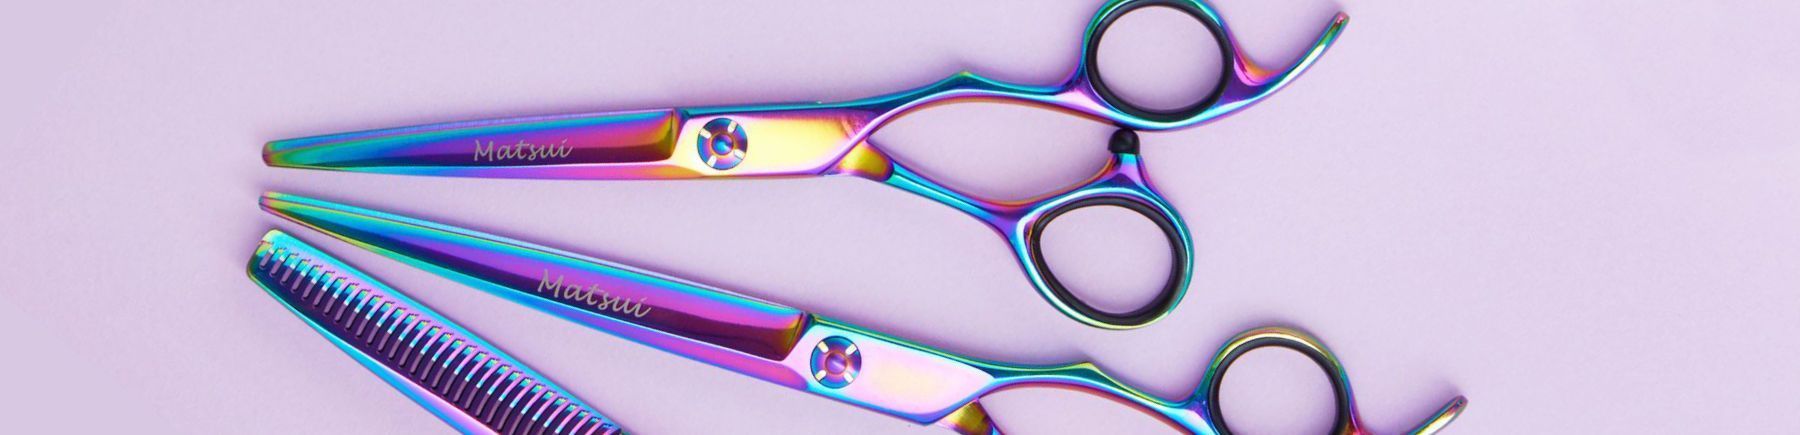 Rainbow Hairdressing Scissors.